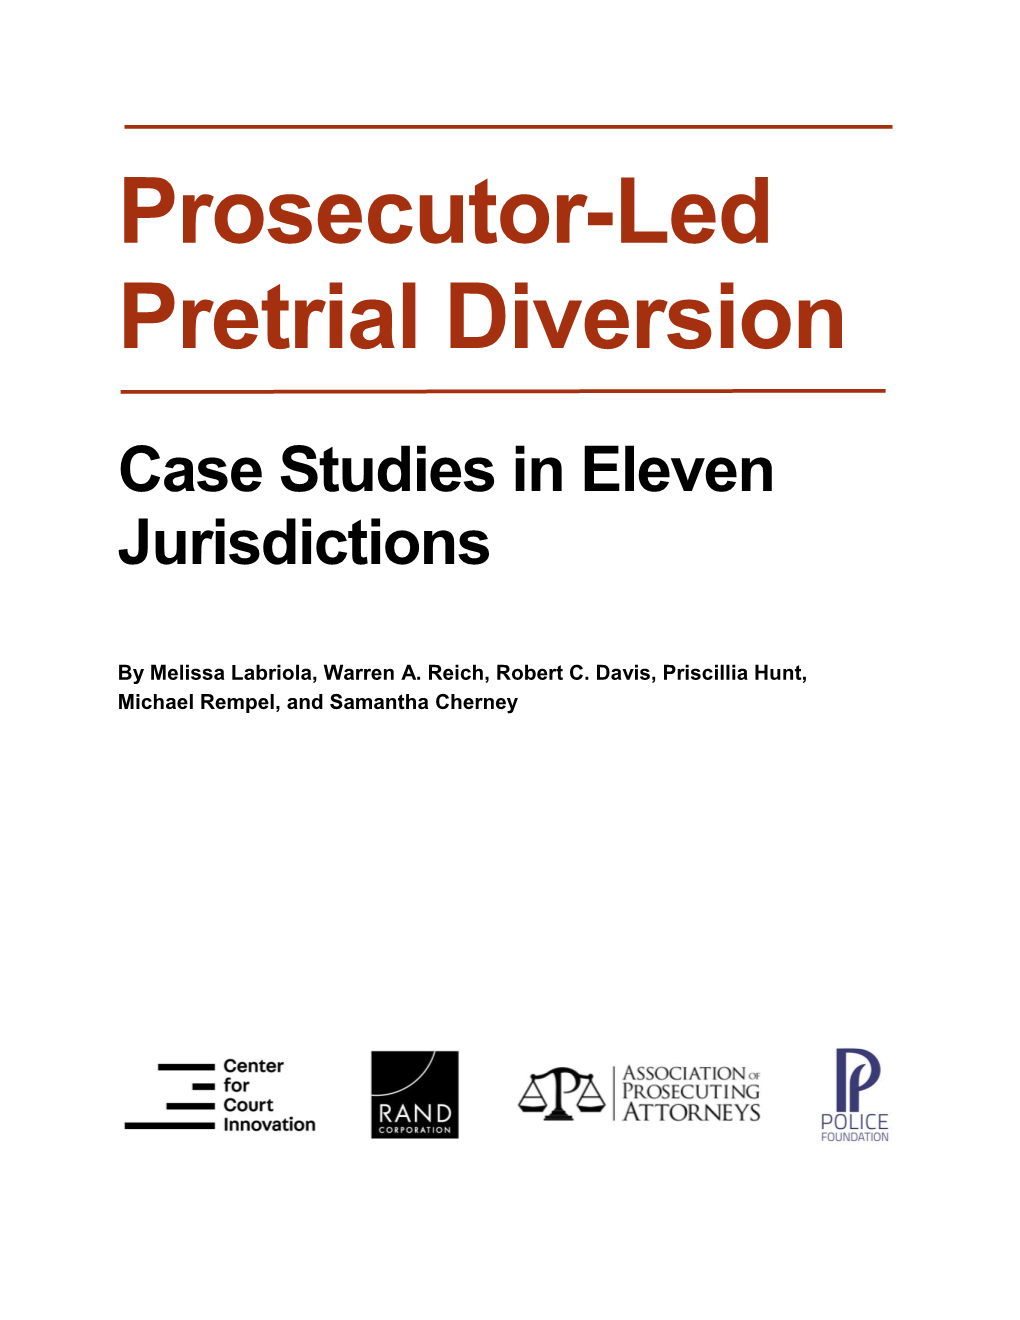 Prosecutor-Led Pretrial Diversion Case Studies in Eleven Jurisdictions